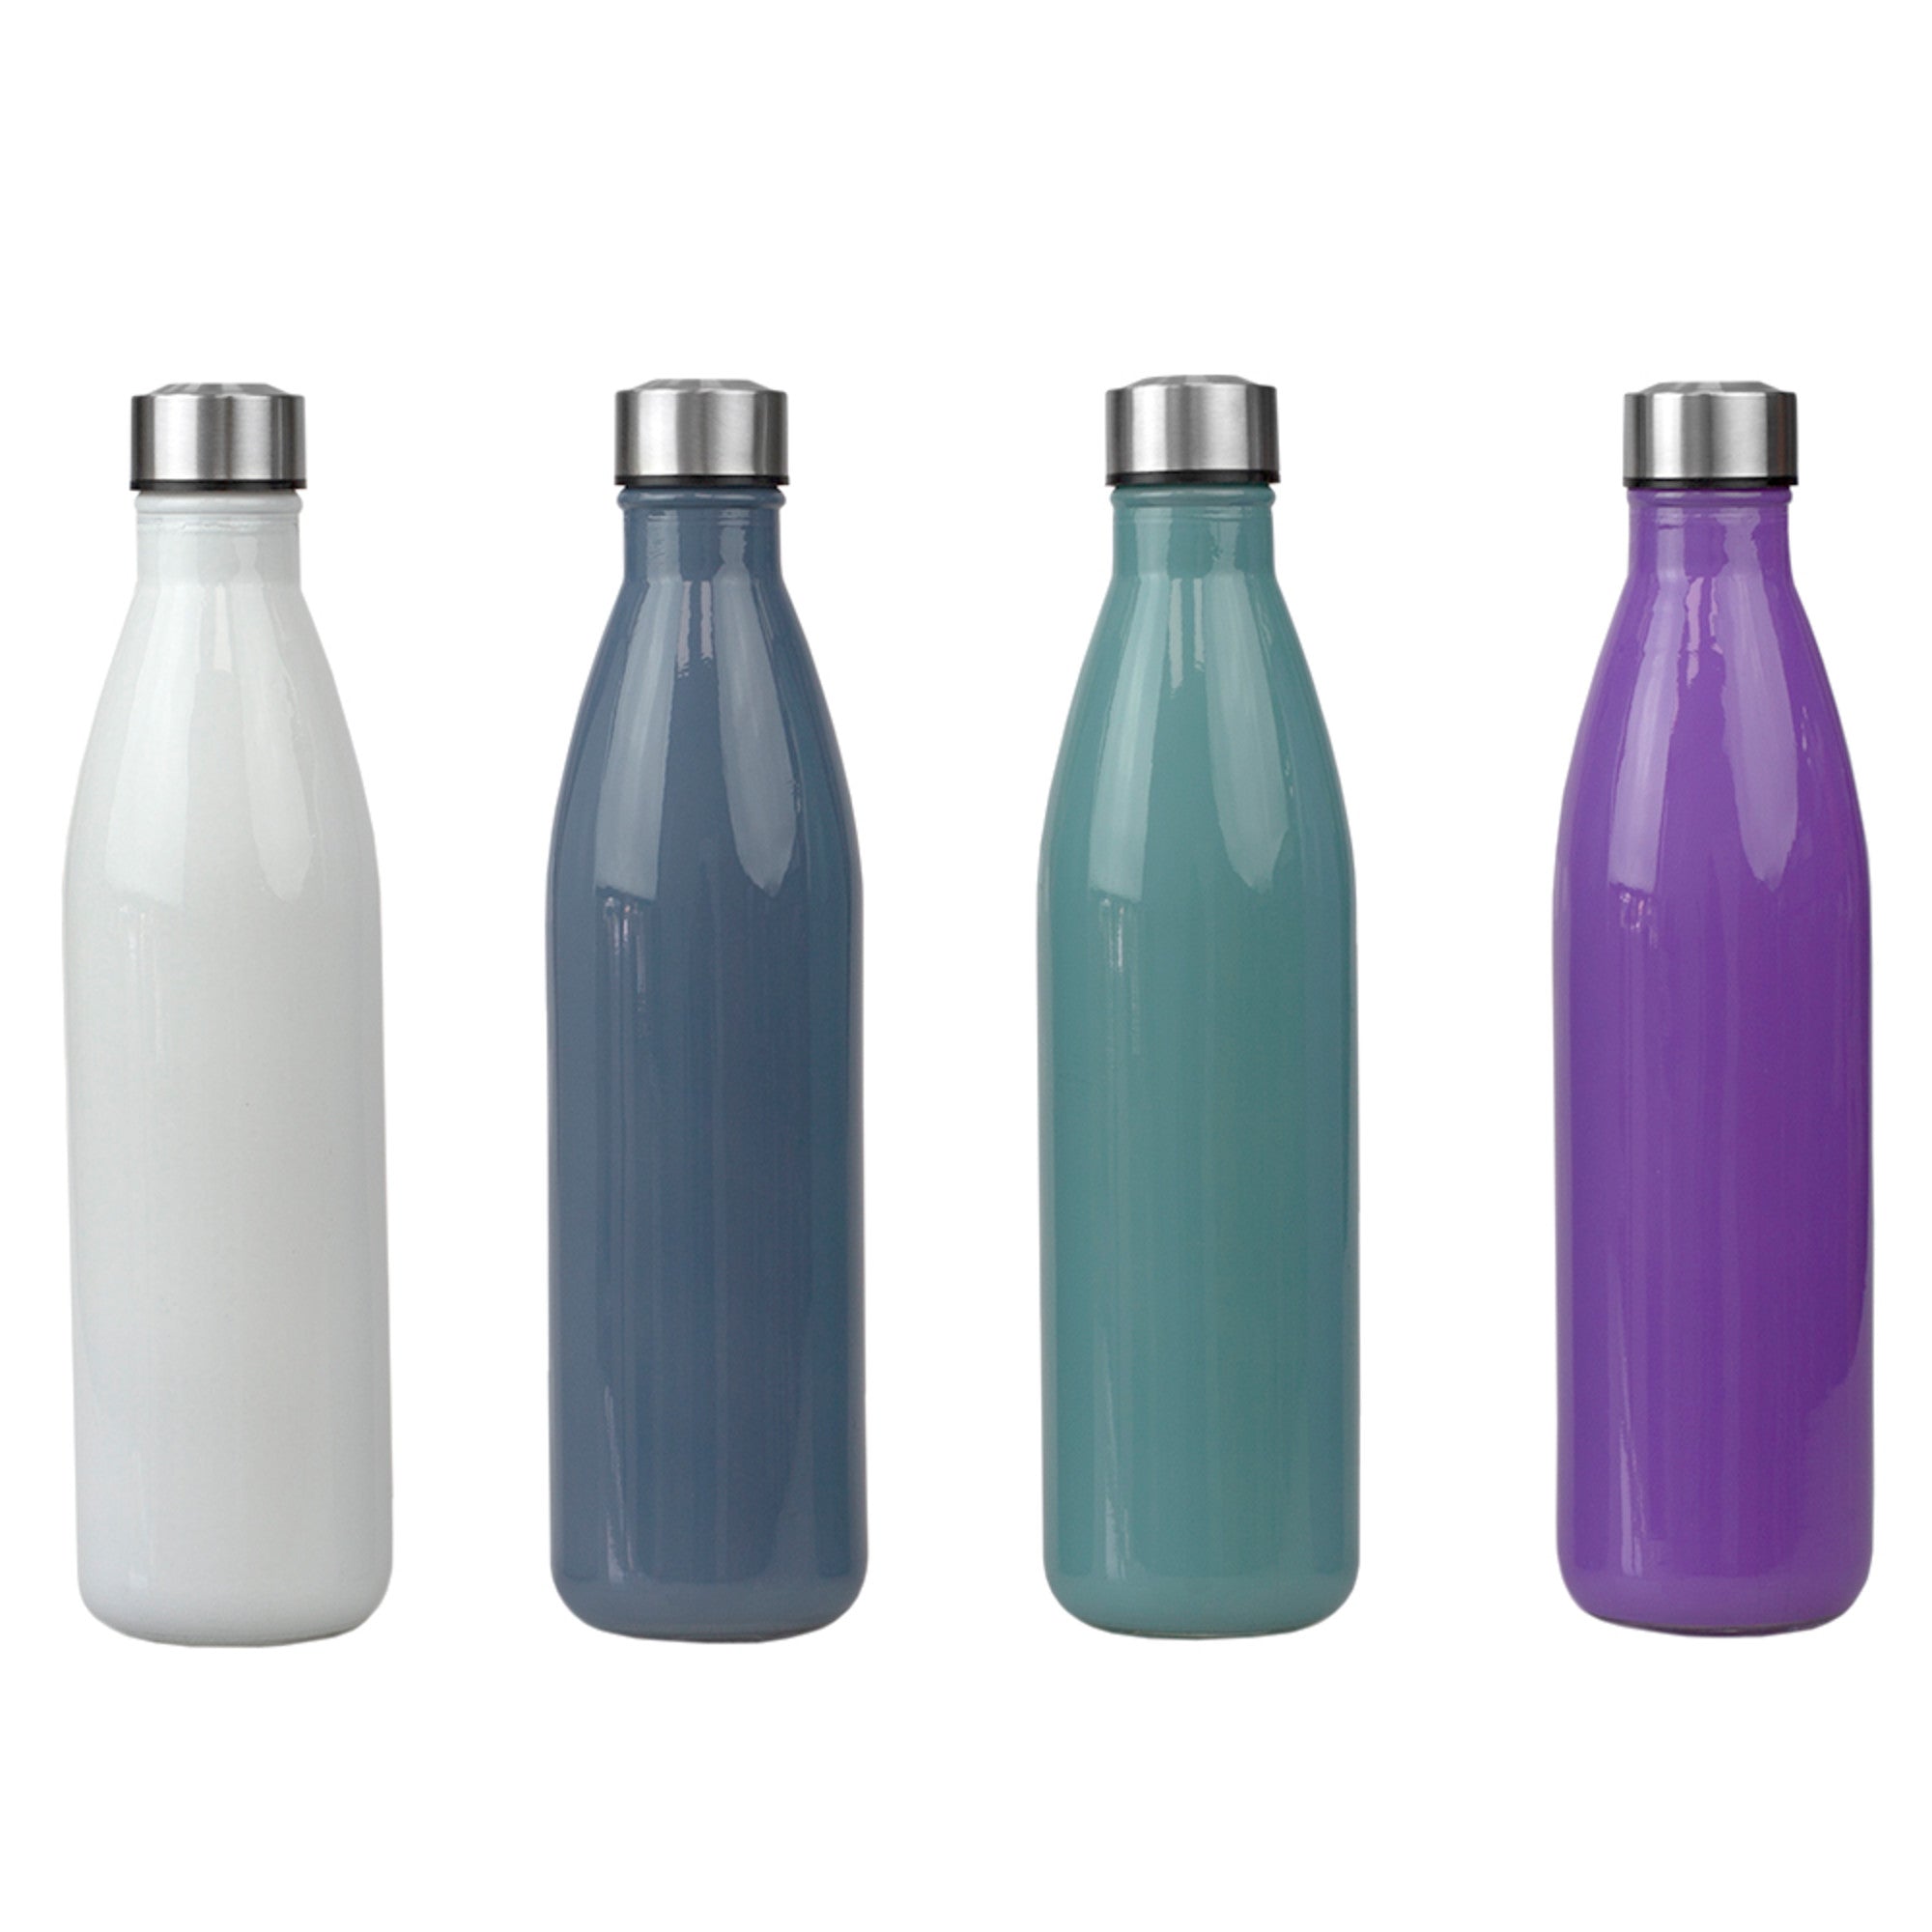 Assorted Glass Water Bottles